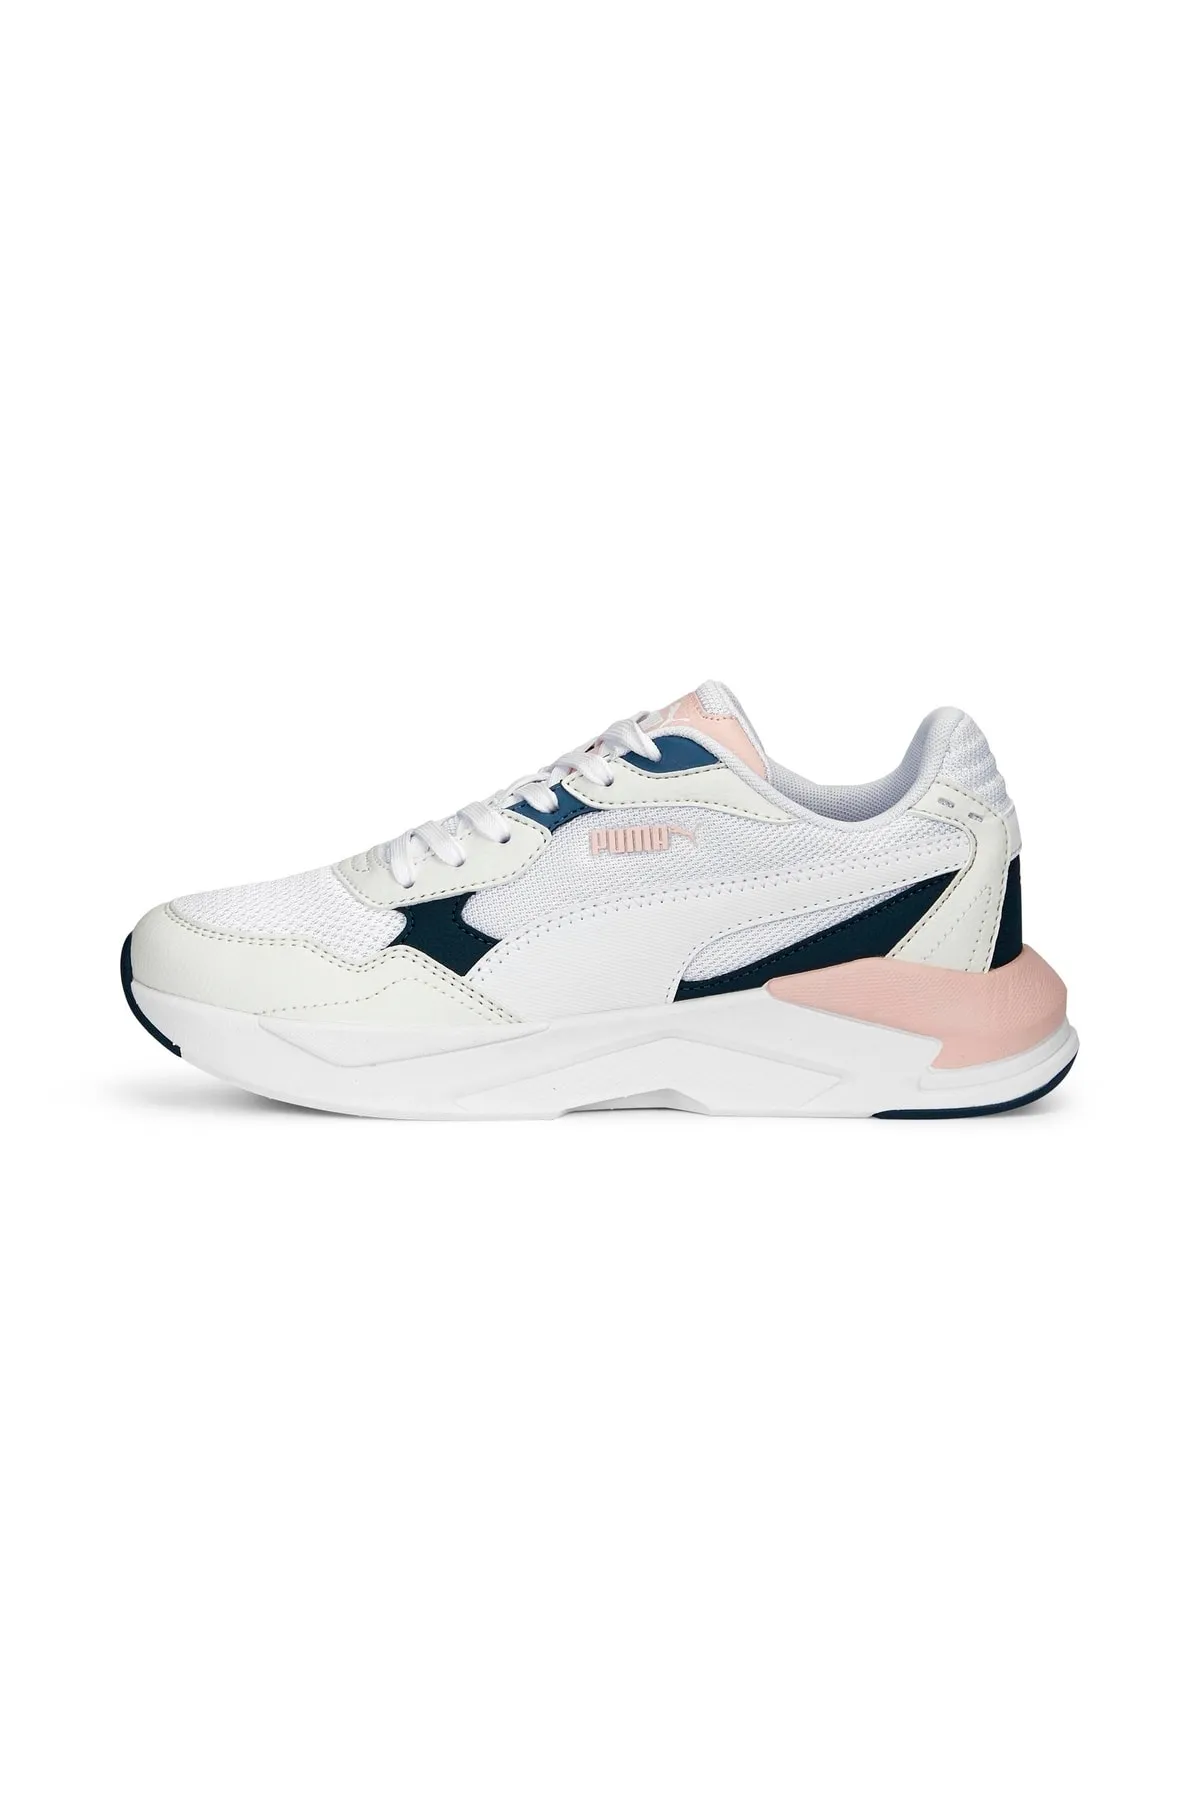 PUMA - X-Ray Speed Lite - Kadın Sneaker Ayakkabı 384639 -Beyaz